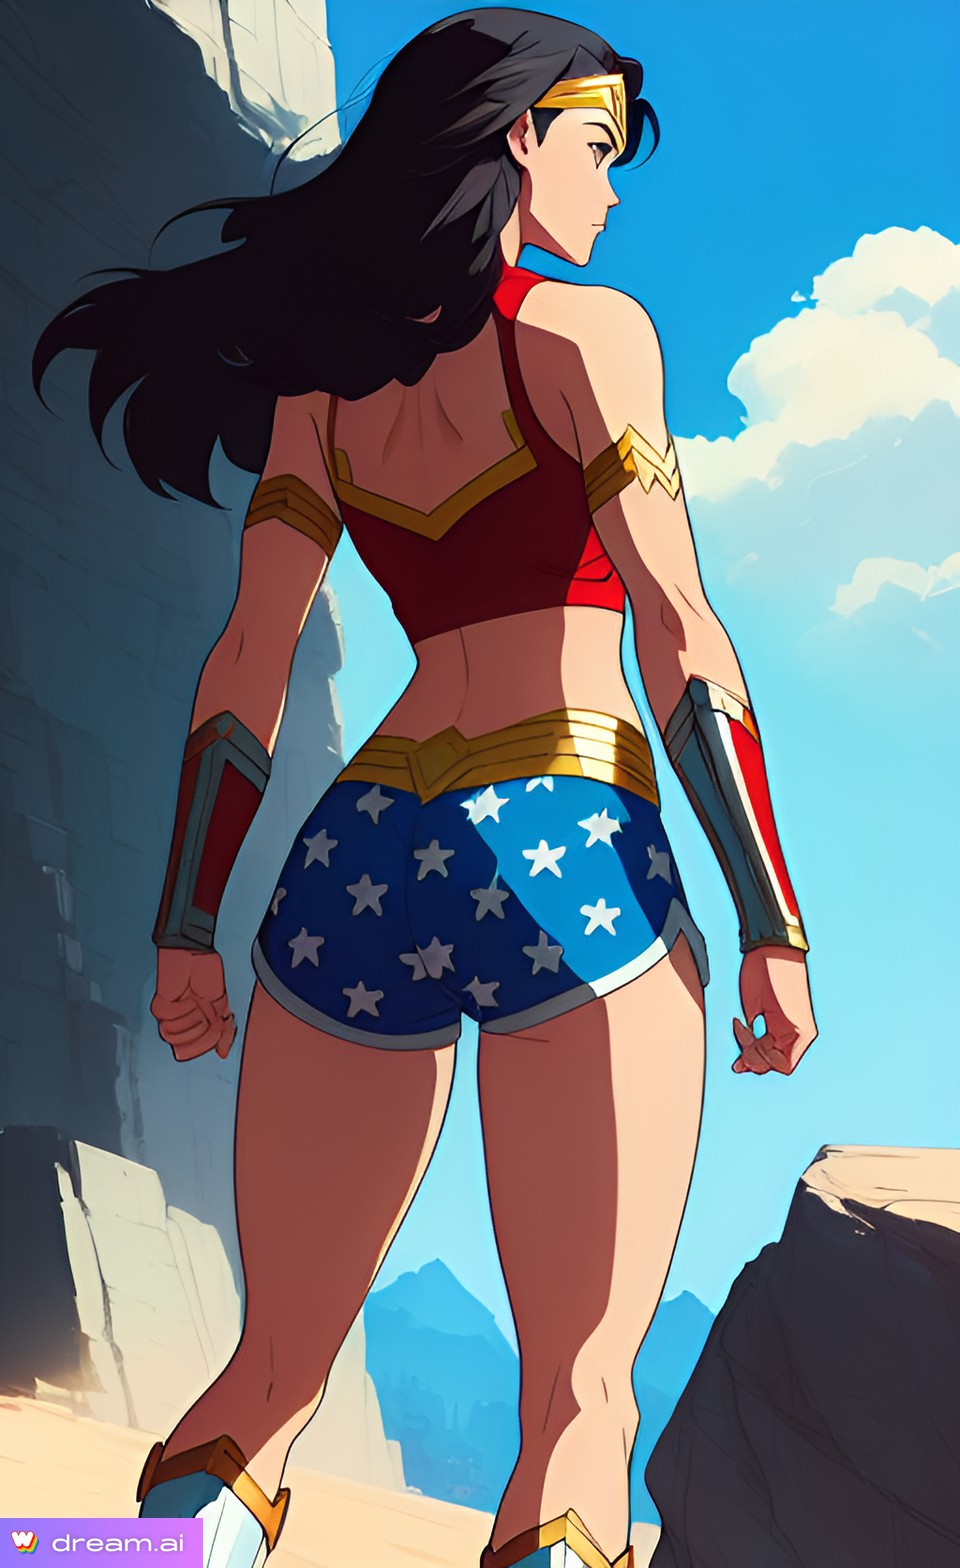 Wonder Woman version 2, an art acrylic by JY Art - INPRNT